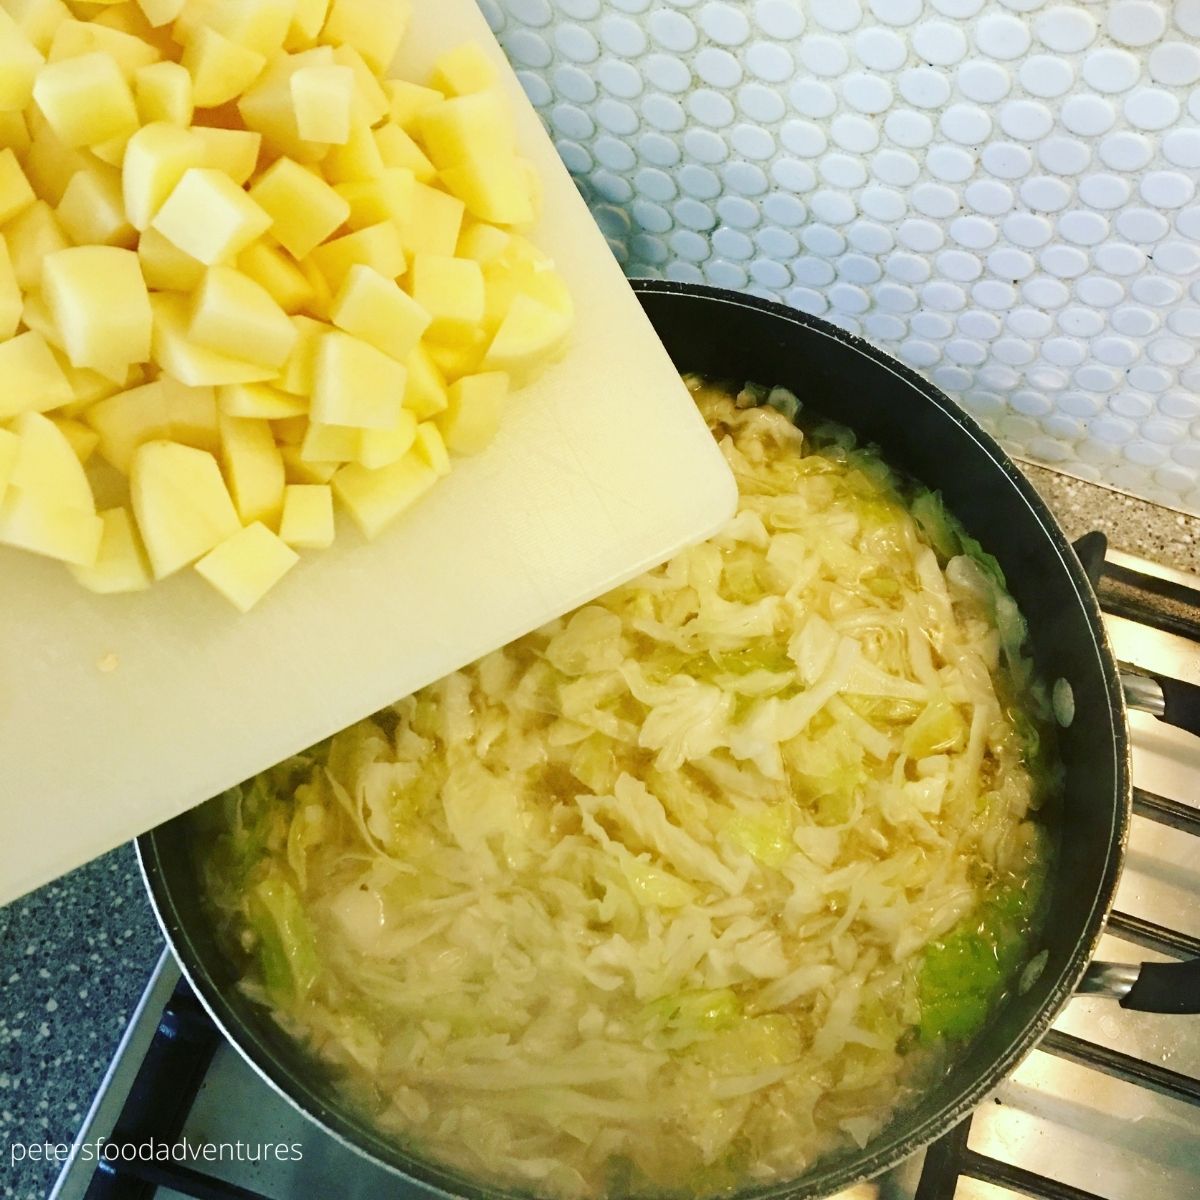 placing potatoes into a pot of soup